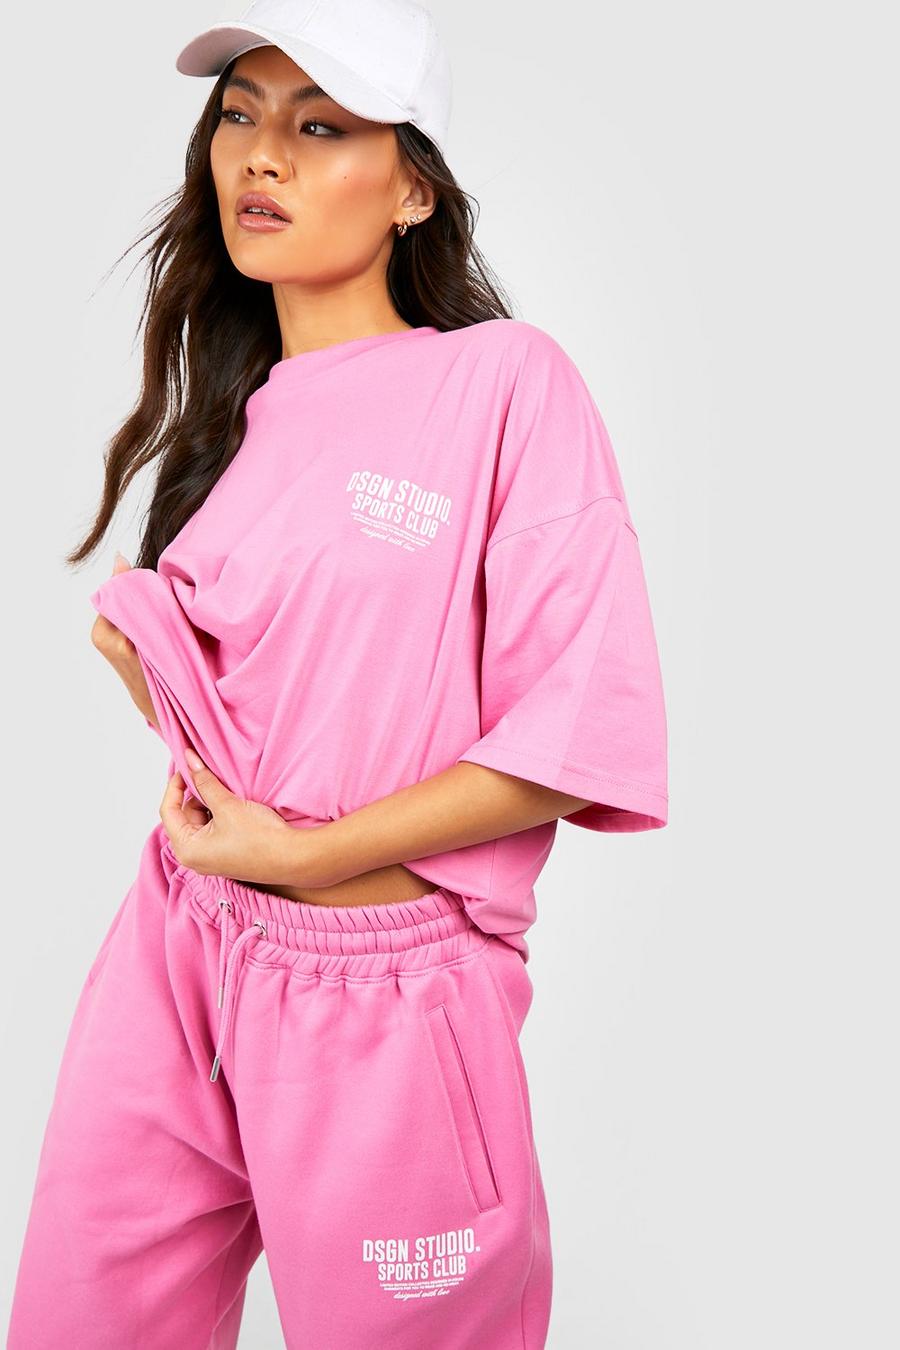 T-shirt oversize con slogan Dsgn Studio Sports Club, Pink rosa